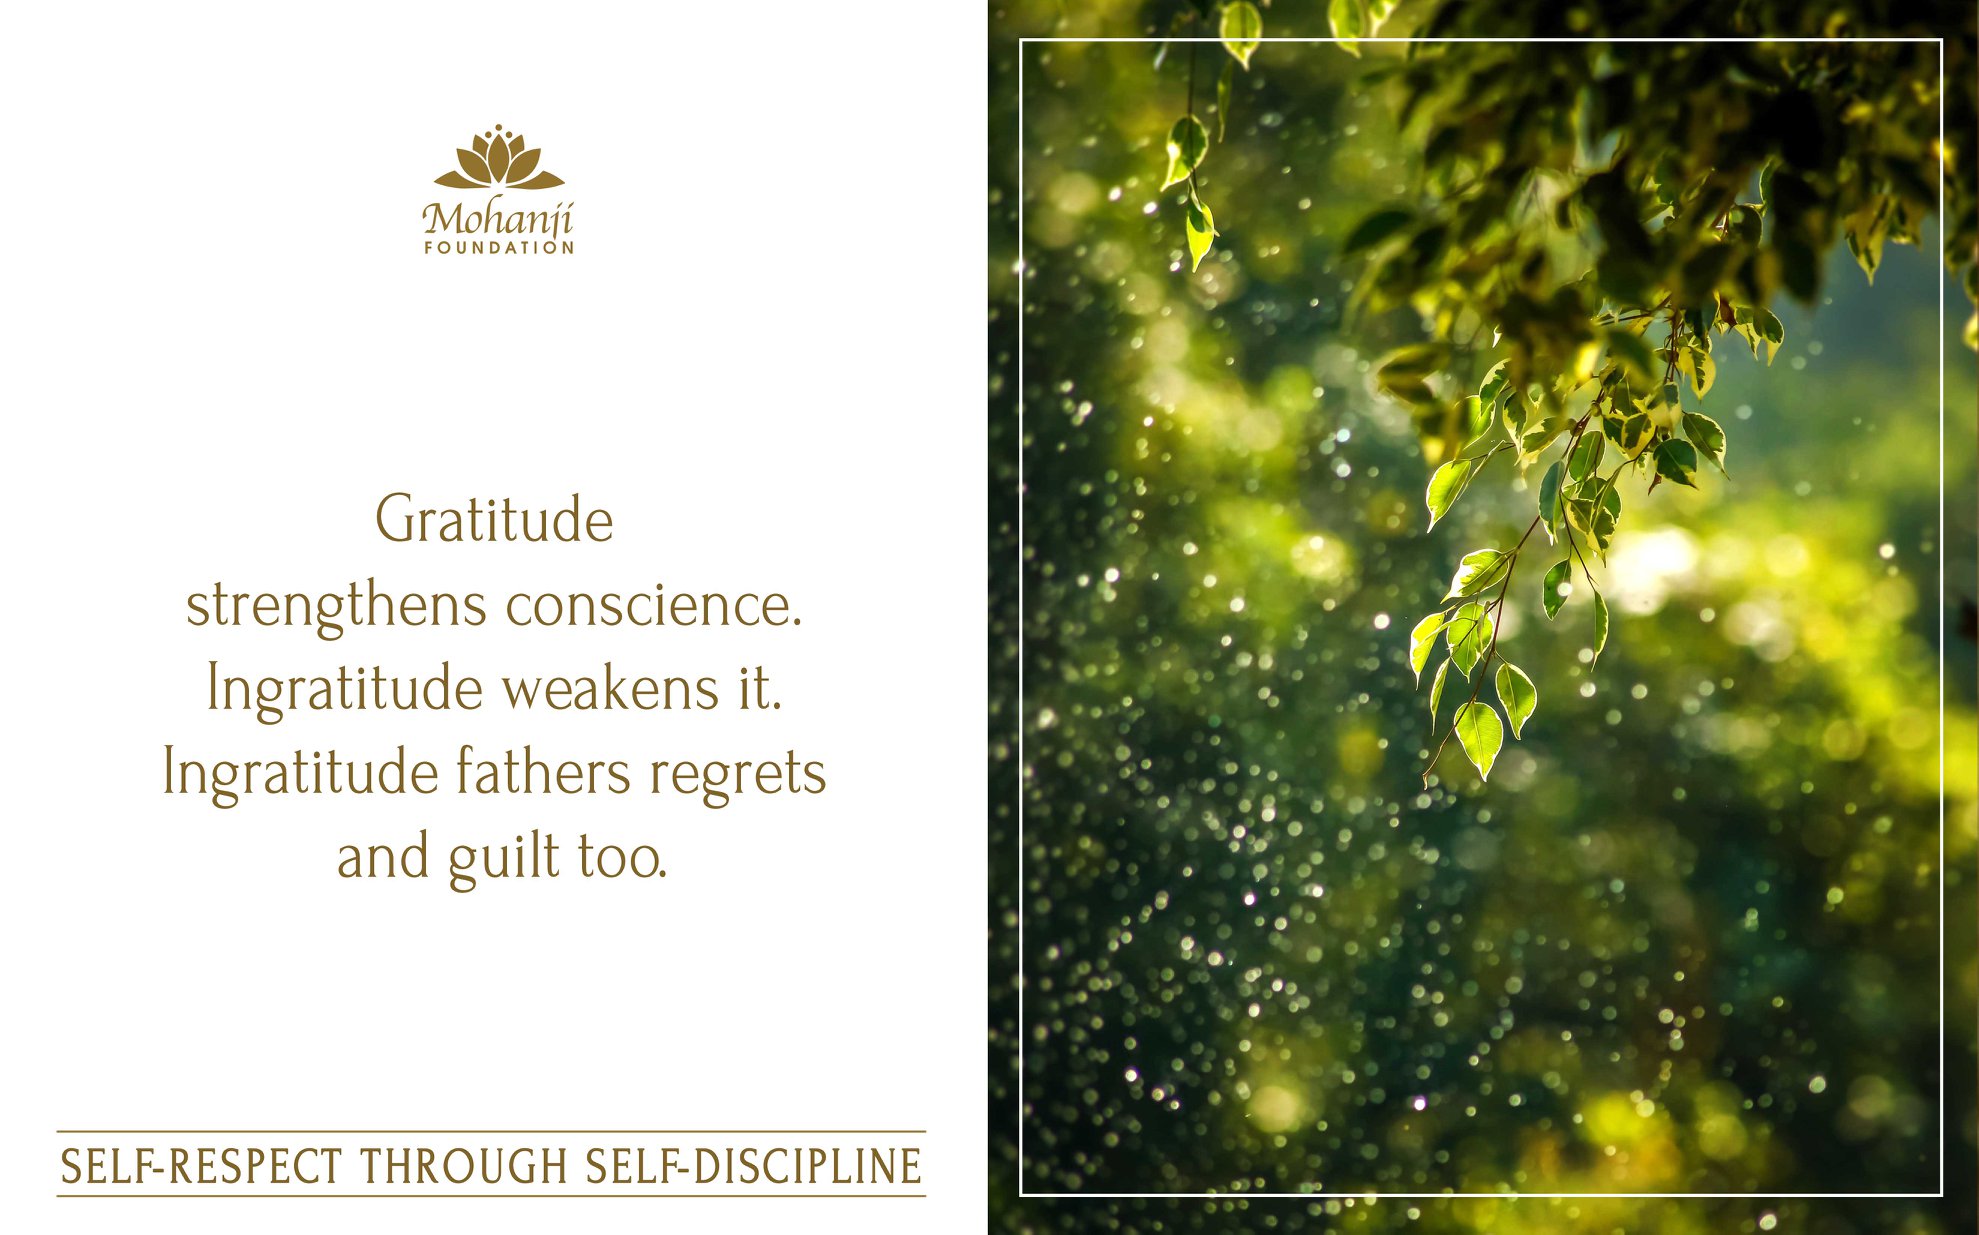 Gratitude strengthens conscience.
Ingratitude weakens it. Ingratitude fathers regrets and guilt too. -Mohanji